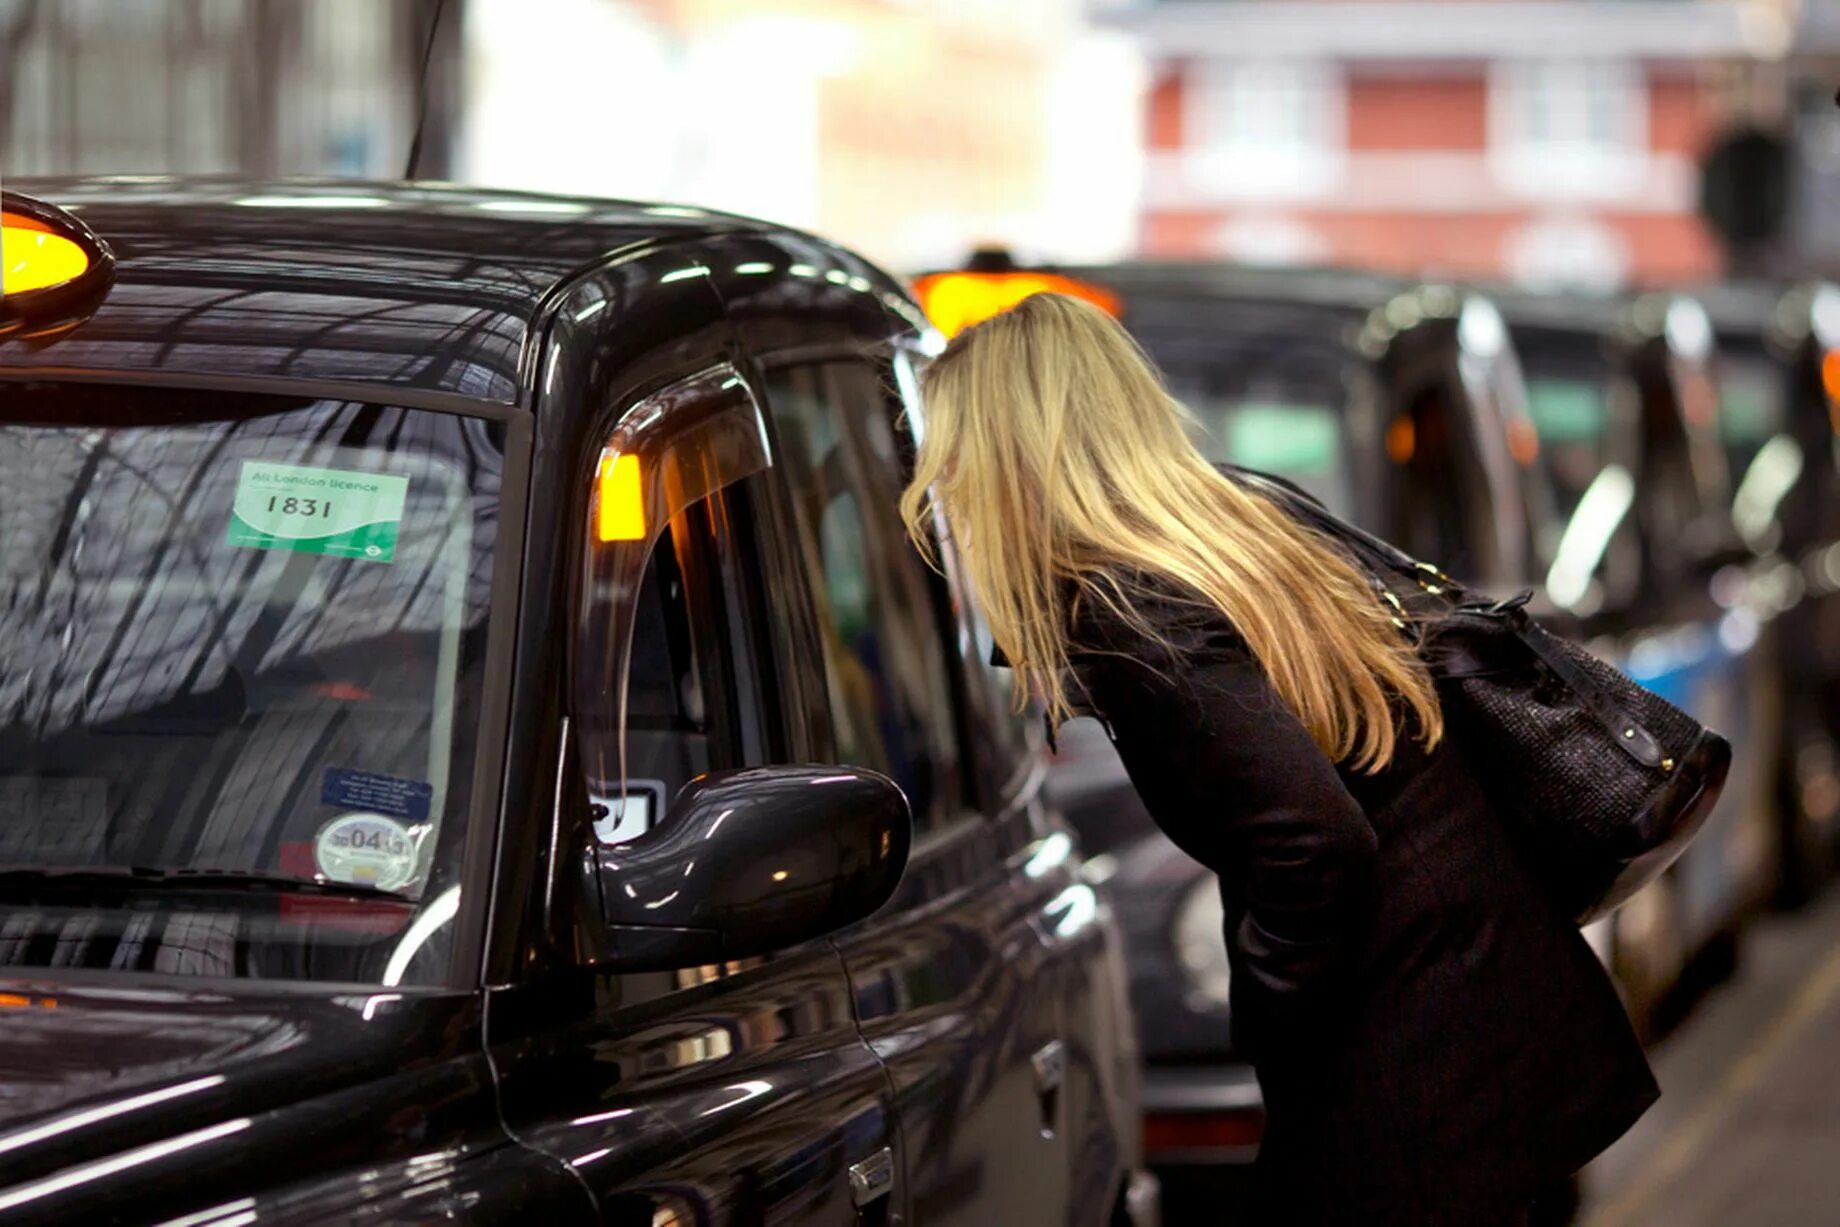 He took a taxi. Блондинка в такси. Грустная девушка в такси. Девушка ловит такси. Такси девушка Лондон.